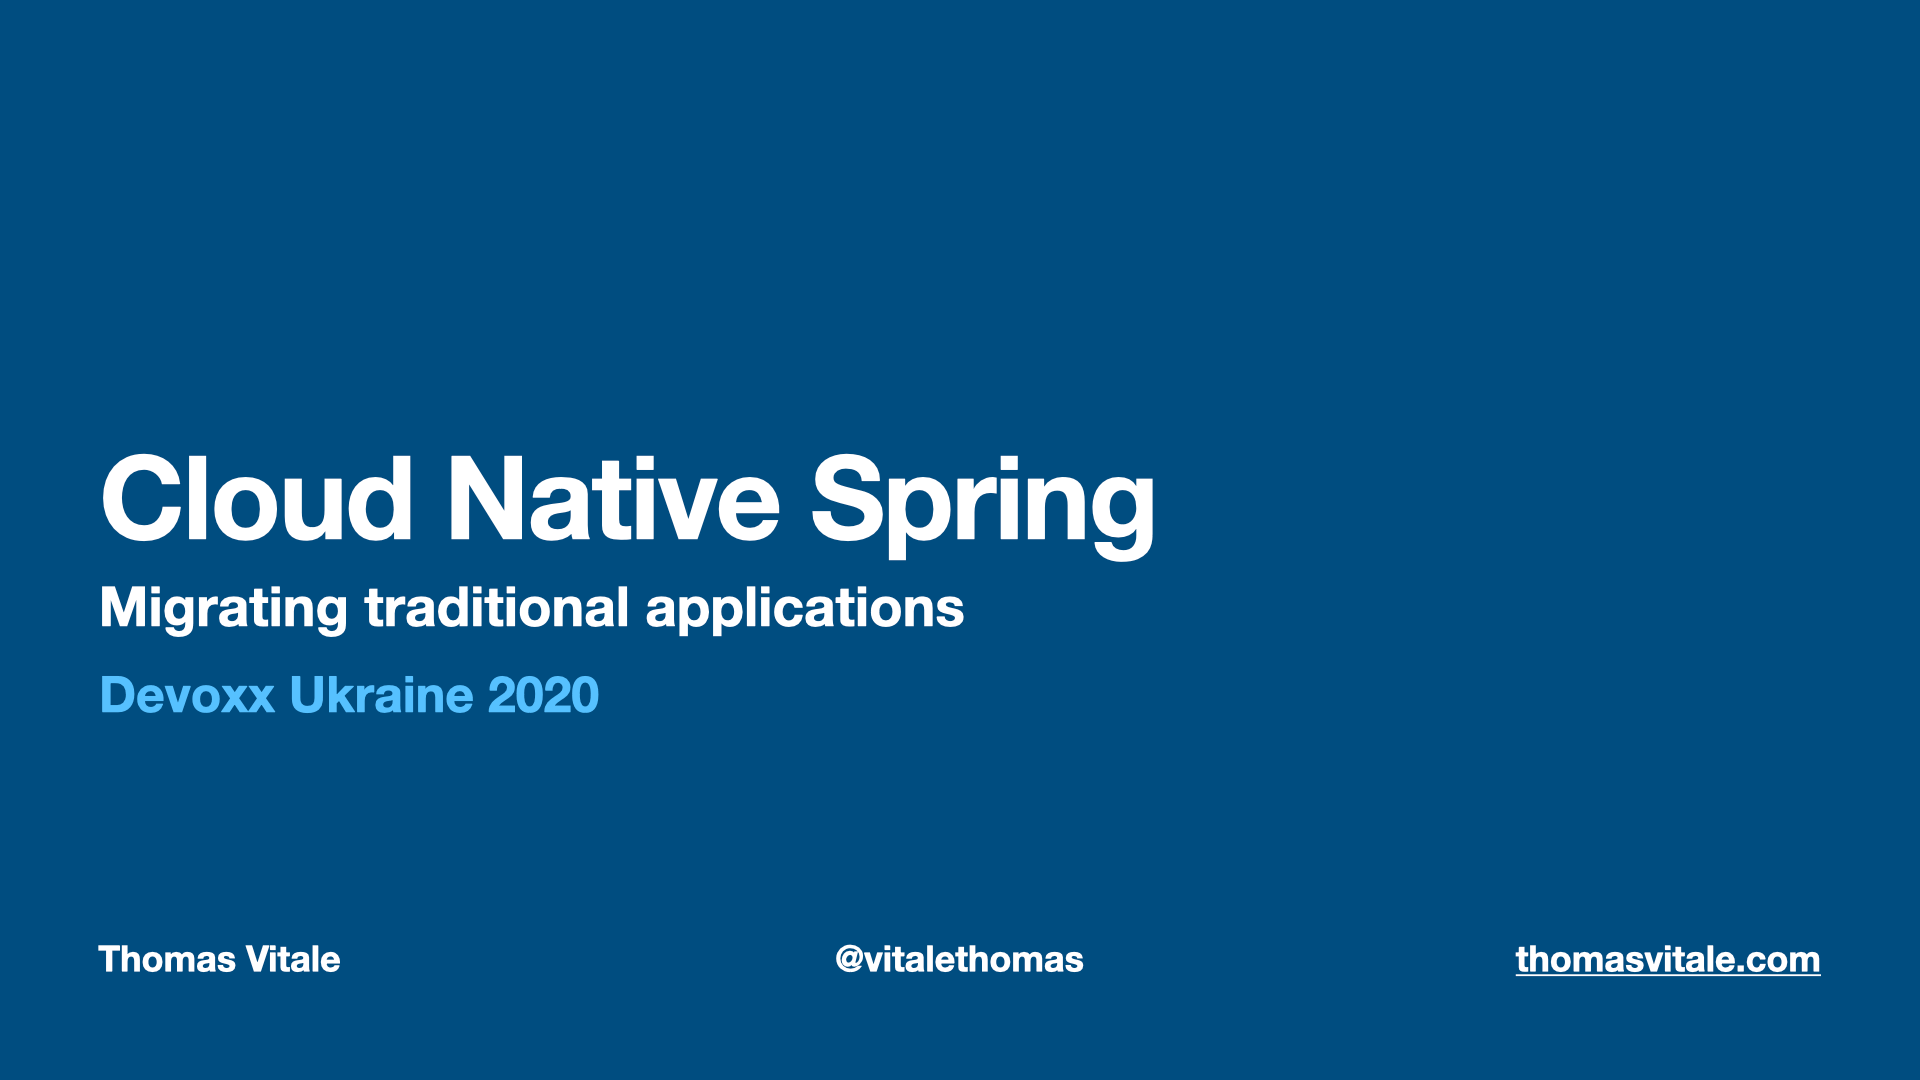 Devoxx Ukraine 2020: "Cloud Native Spring - Migrating traditional apps" (Talk)